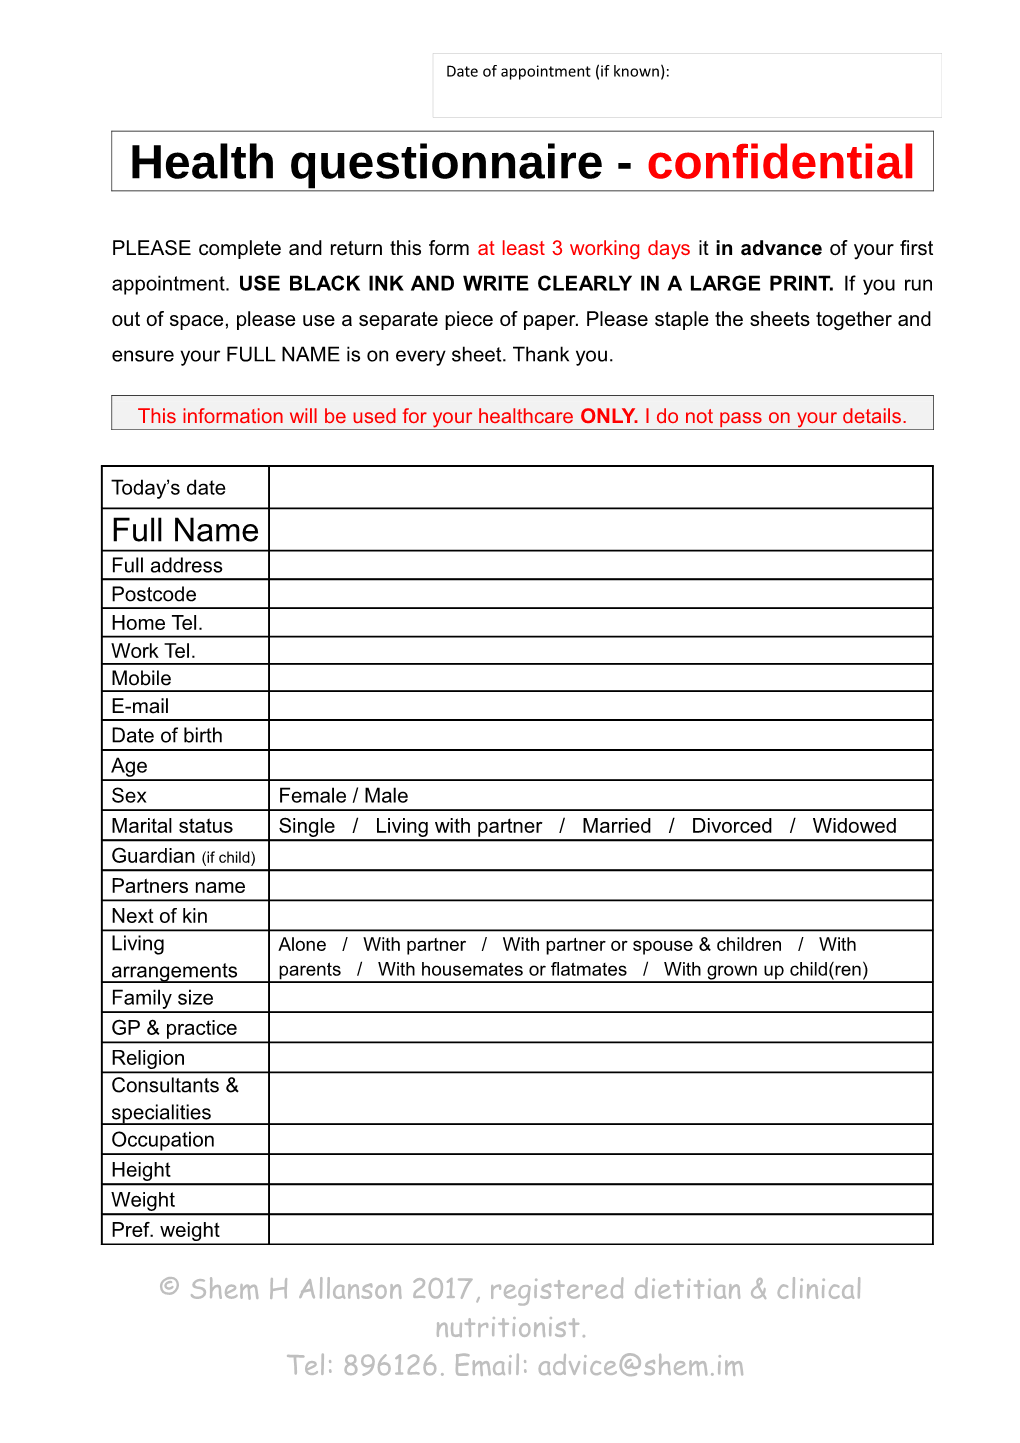 Health Questionnaire - Confidential